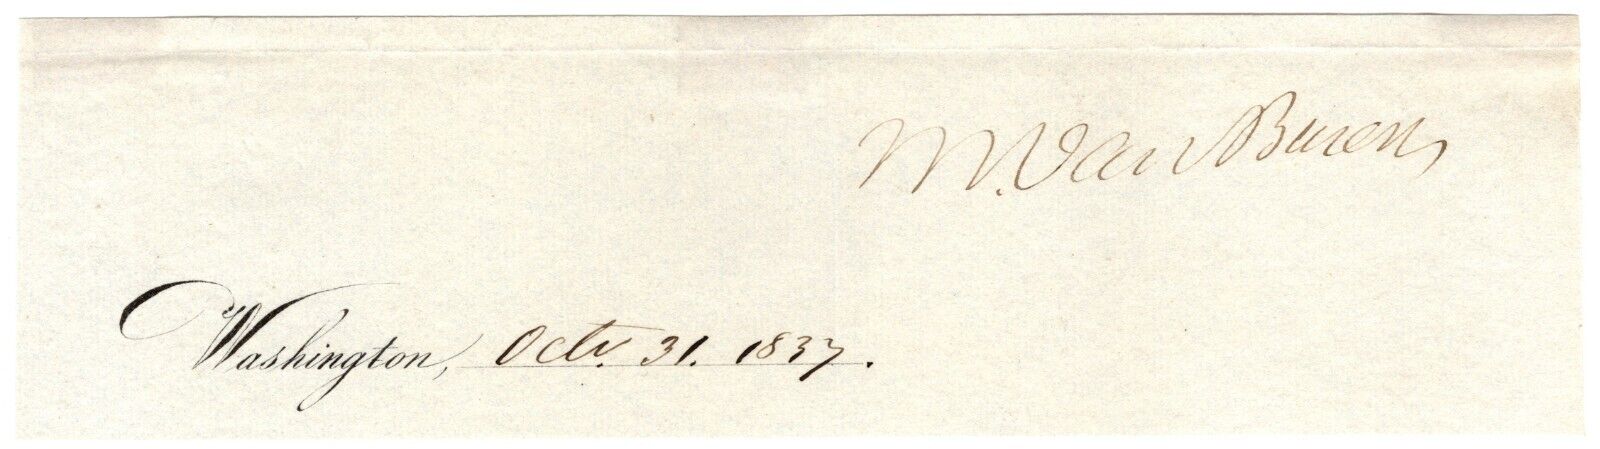 Martin Van Buren - Ink Signature as President - In Near Pristine Condition